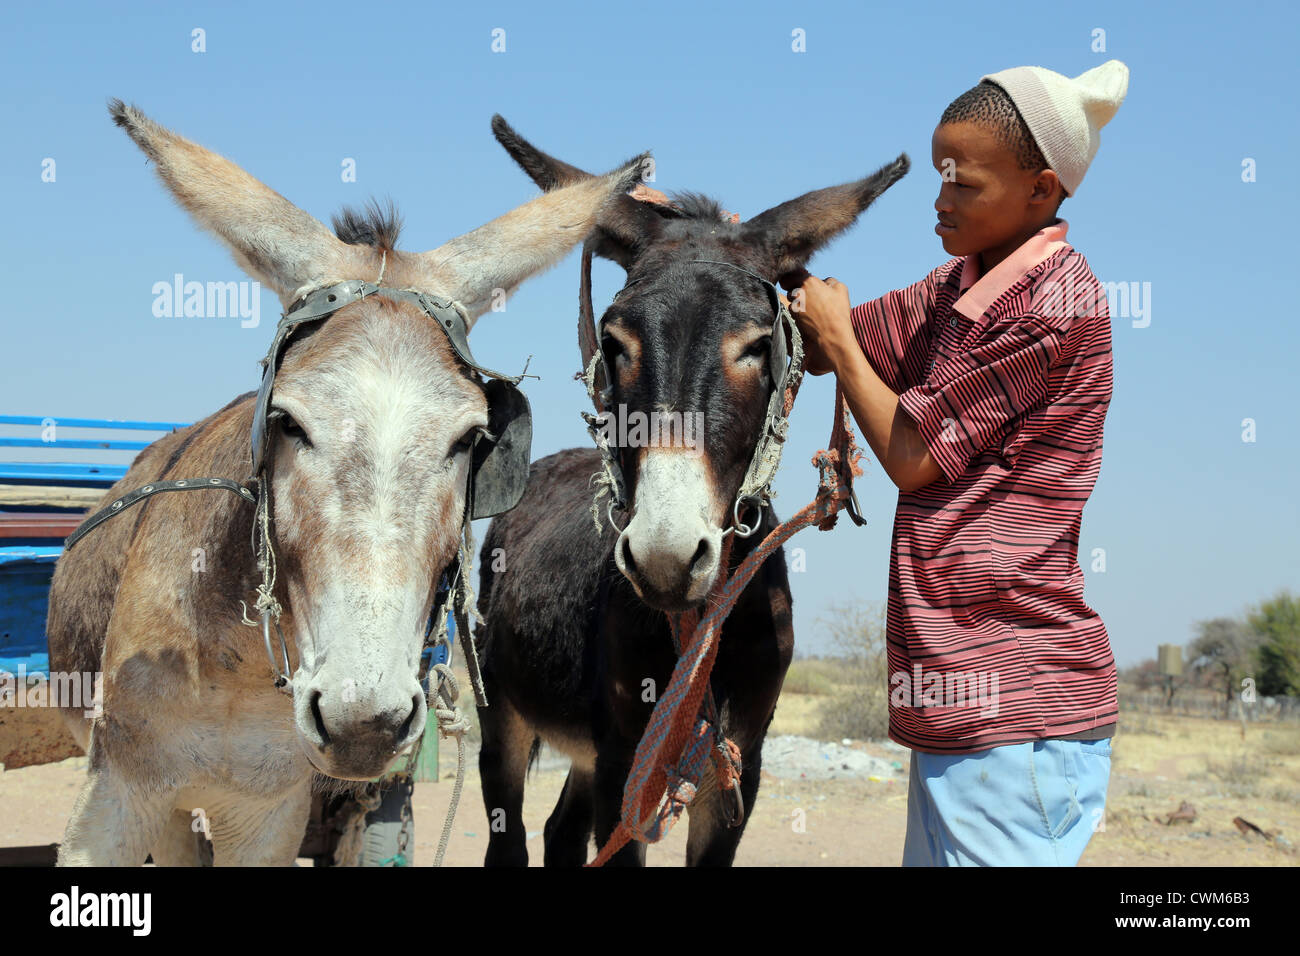 Boy of the indigenous San tribe stretches donkeys to a cart, Namibia, Kalahari desert Stock Photo